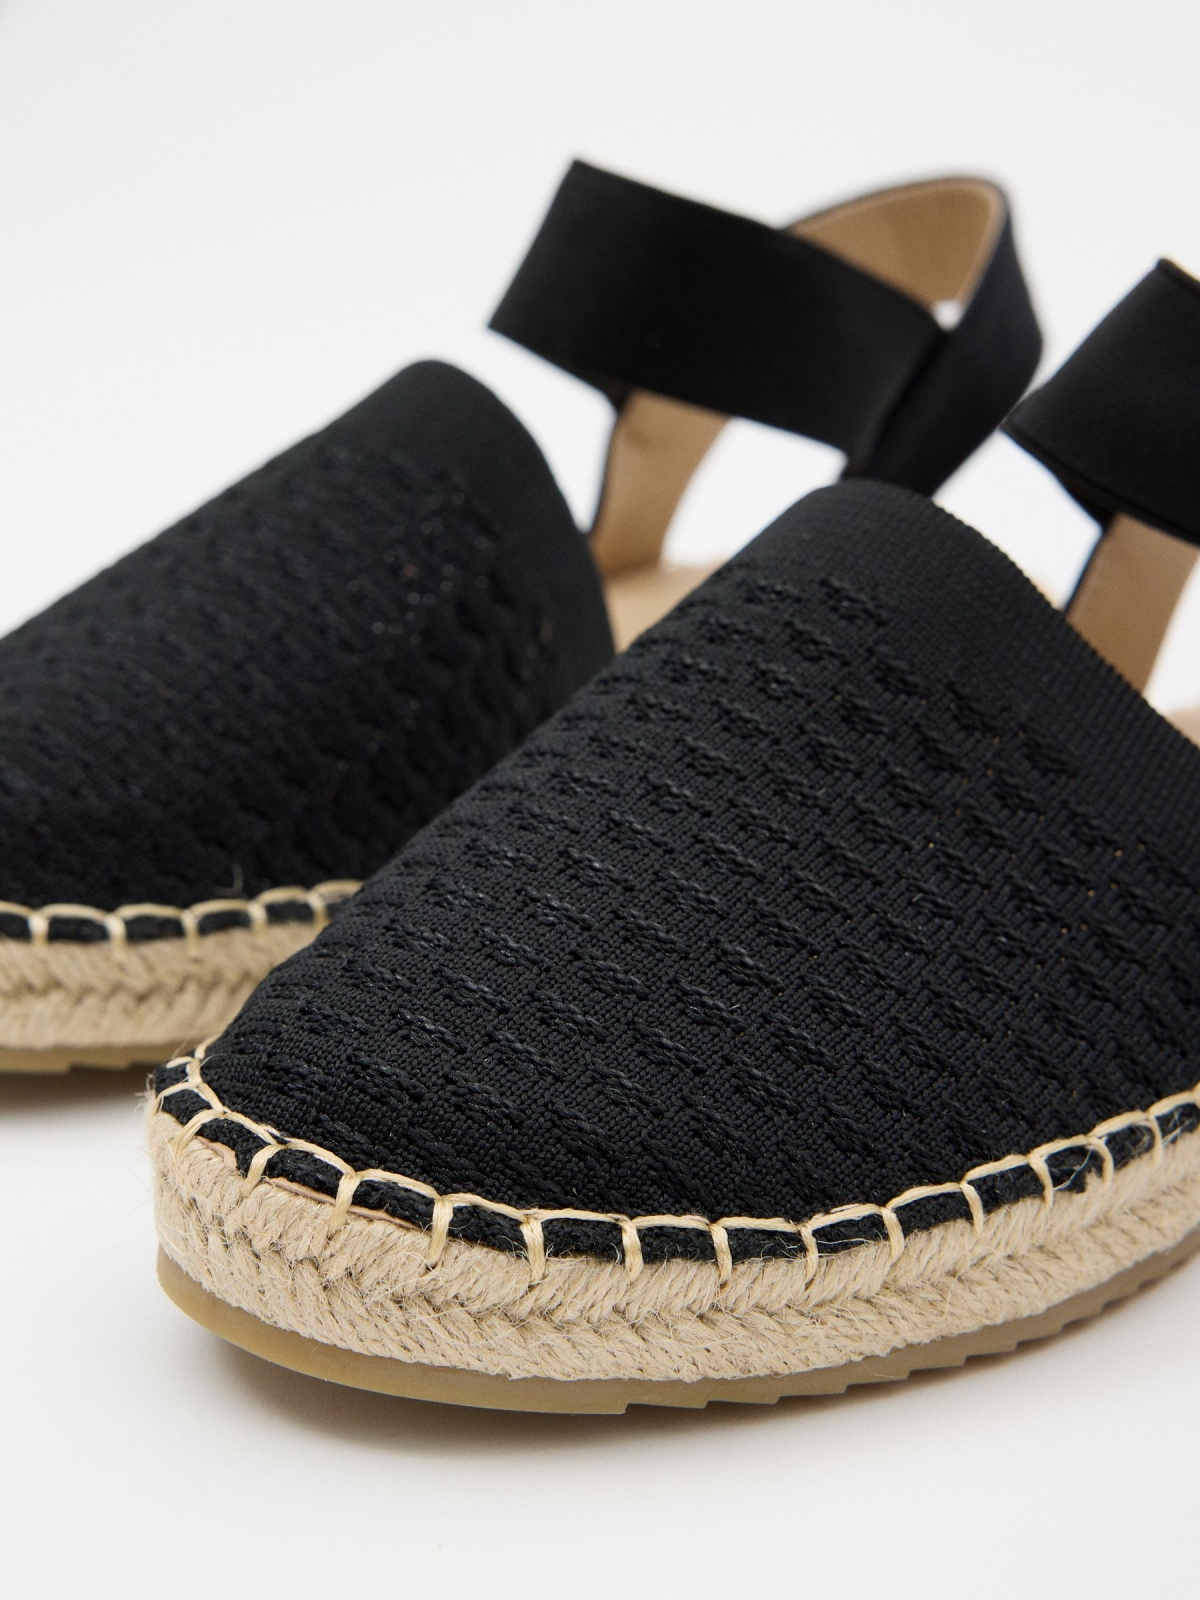 Jute and nylon sandal black/beige detail view